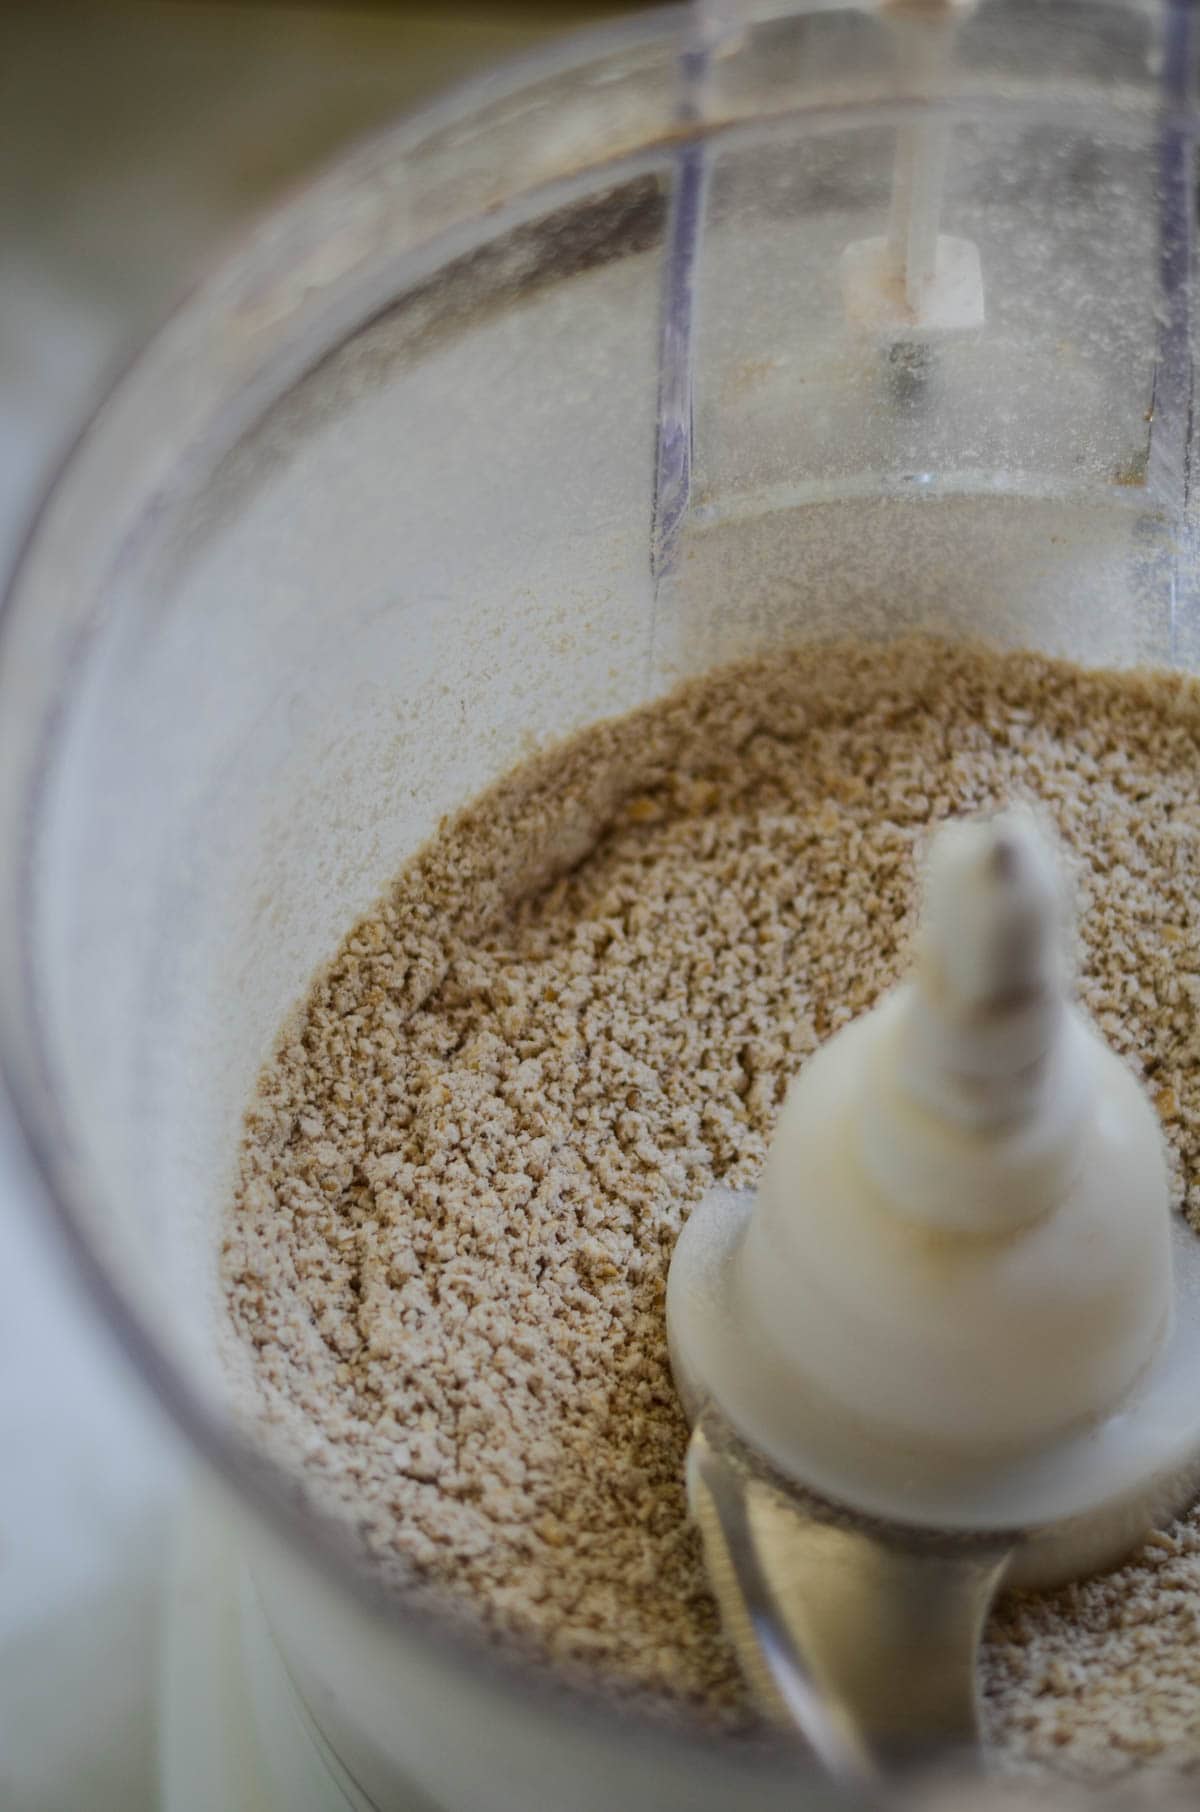 Blended oats in a food processor making oat flour.